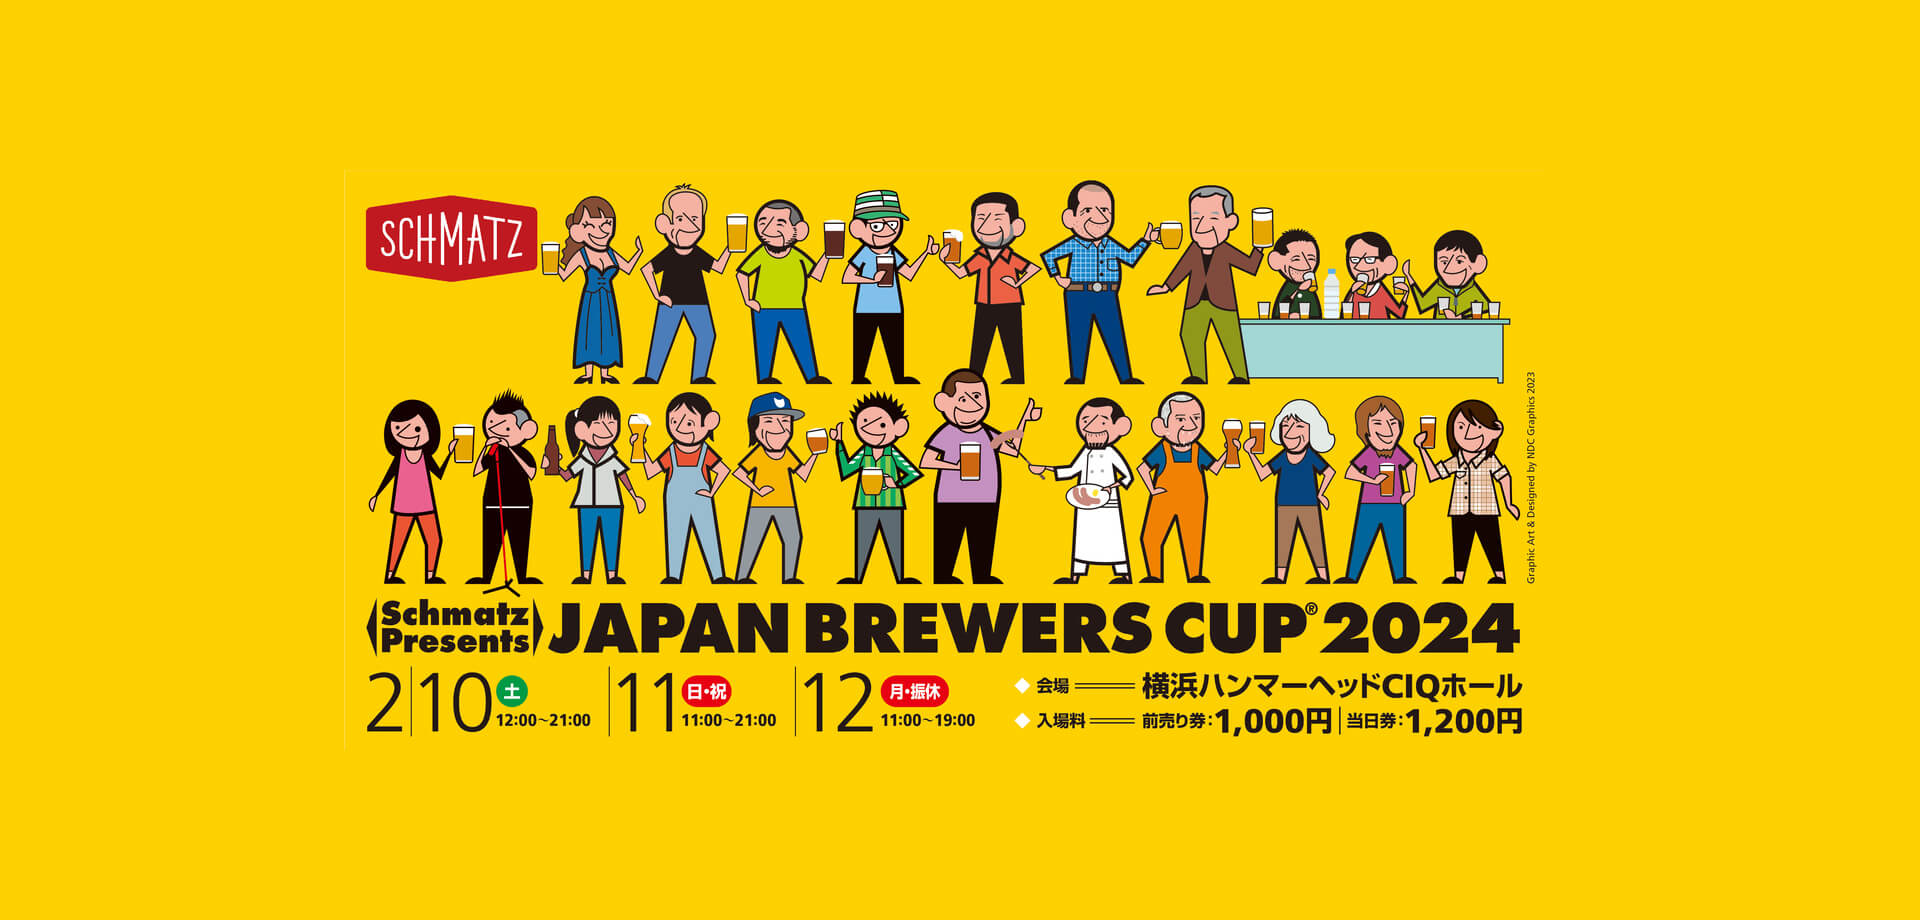 Schmatz presents JAPAN BREWERS CUP 2024